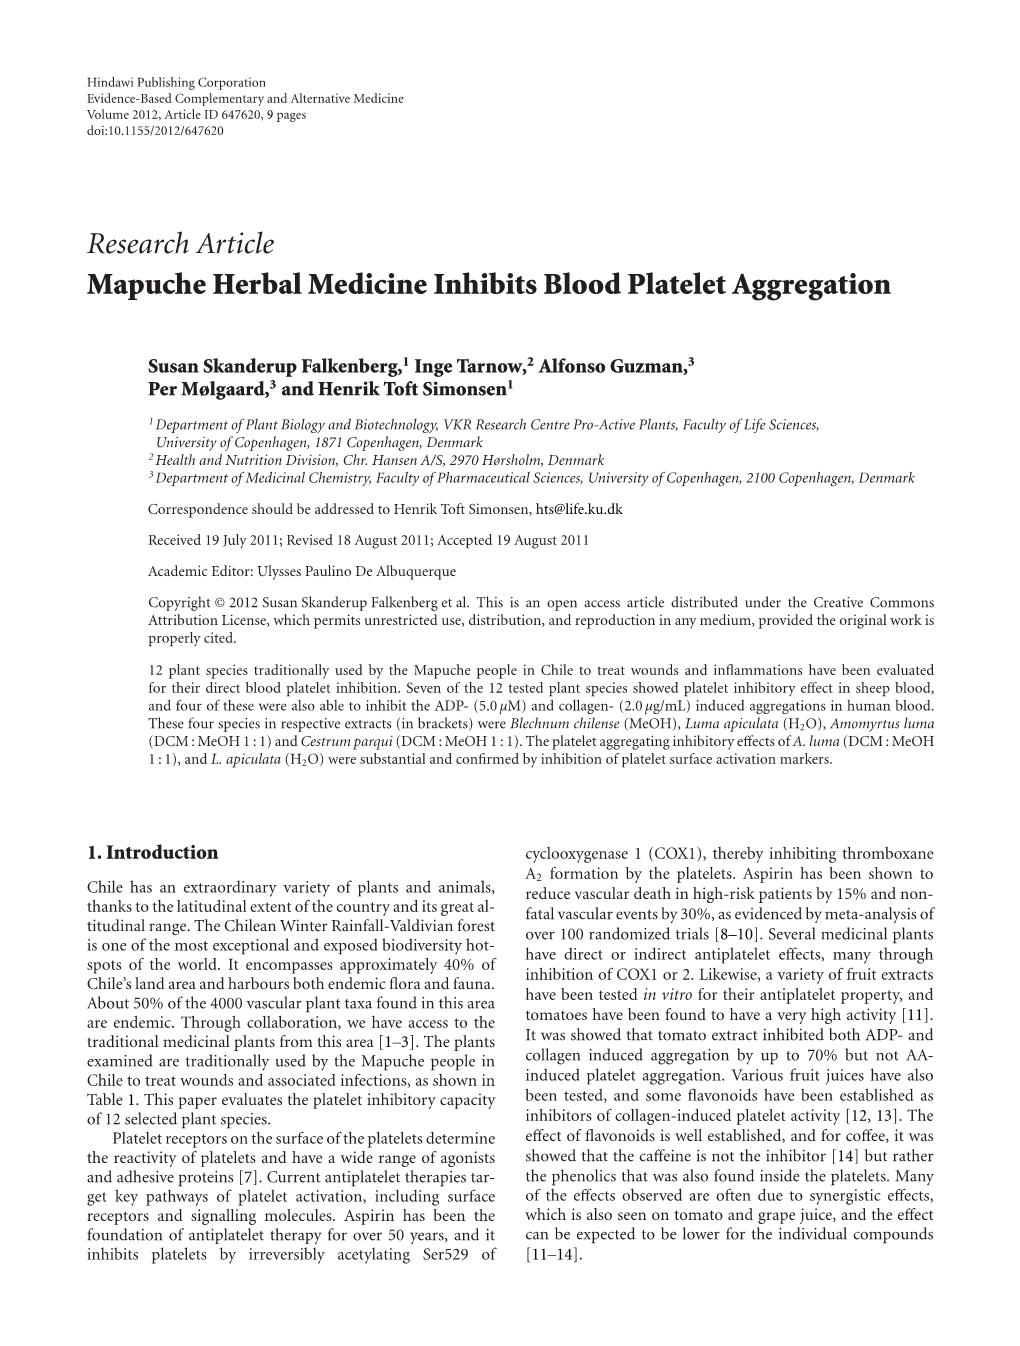 Mapuche Herbal Medicine Inhibits Blood Platelet Aggregation